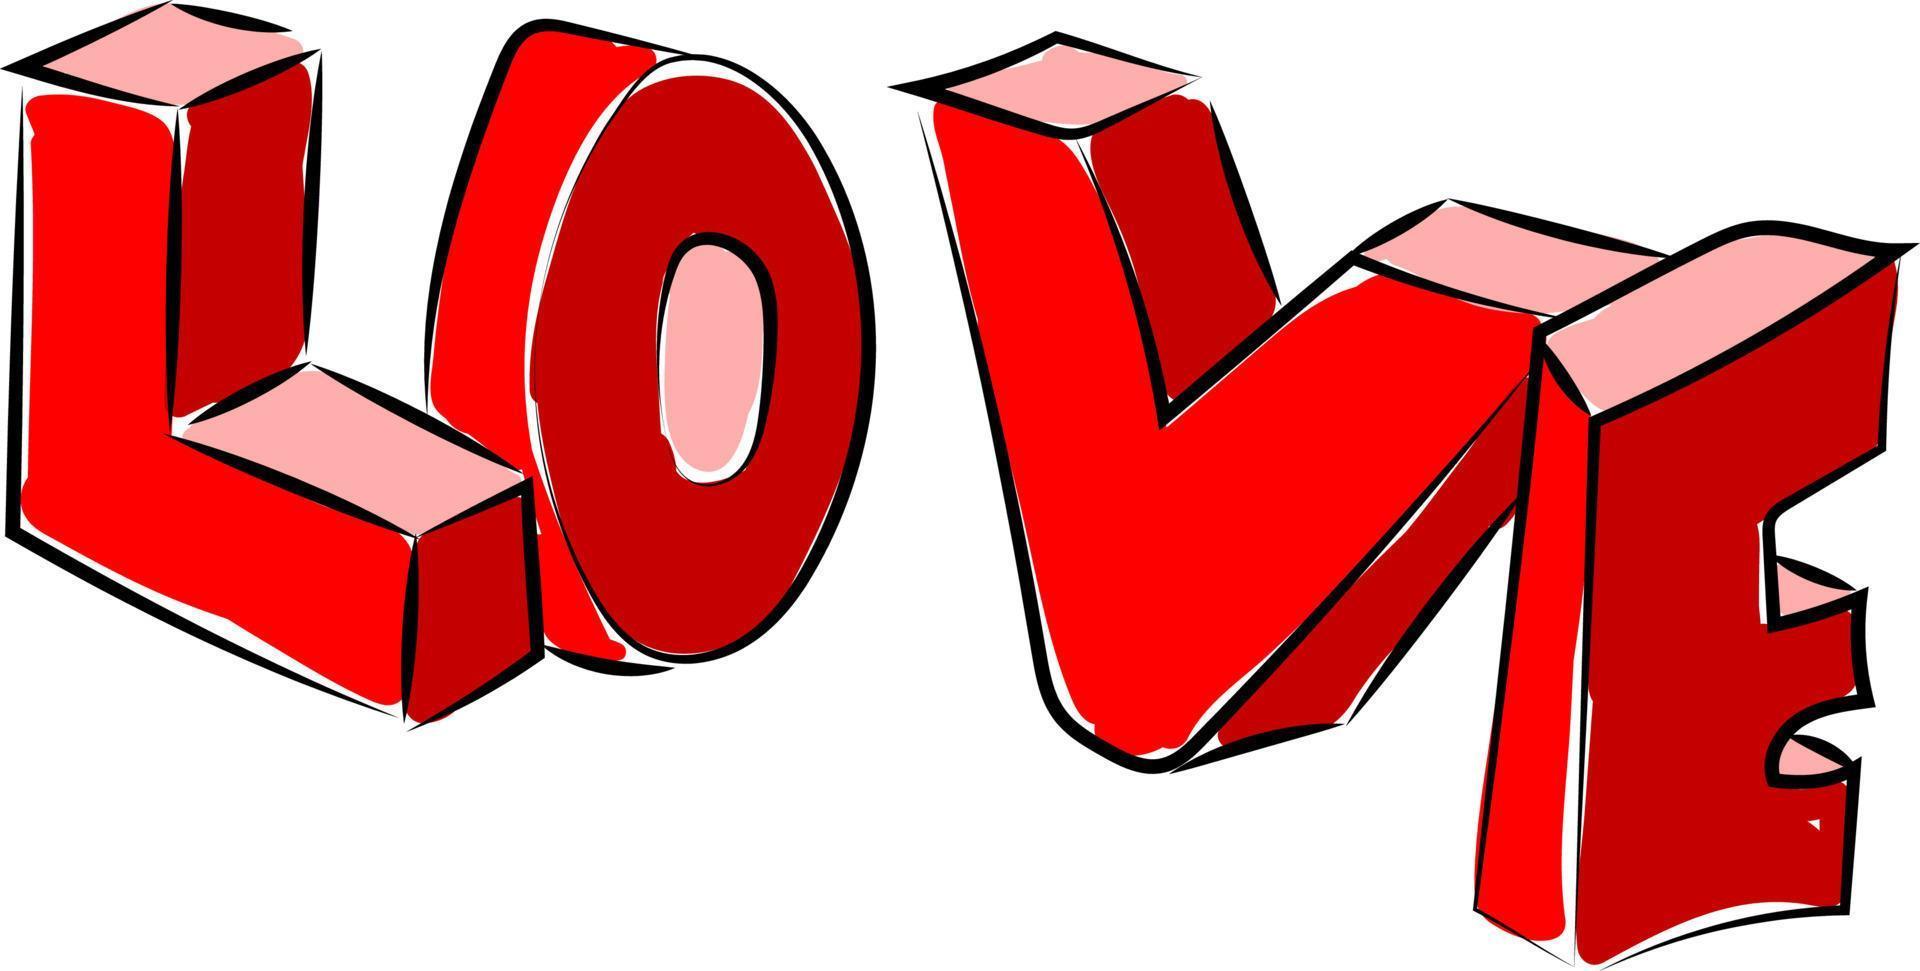 Love in 3d, illustration, vector on white background